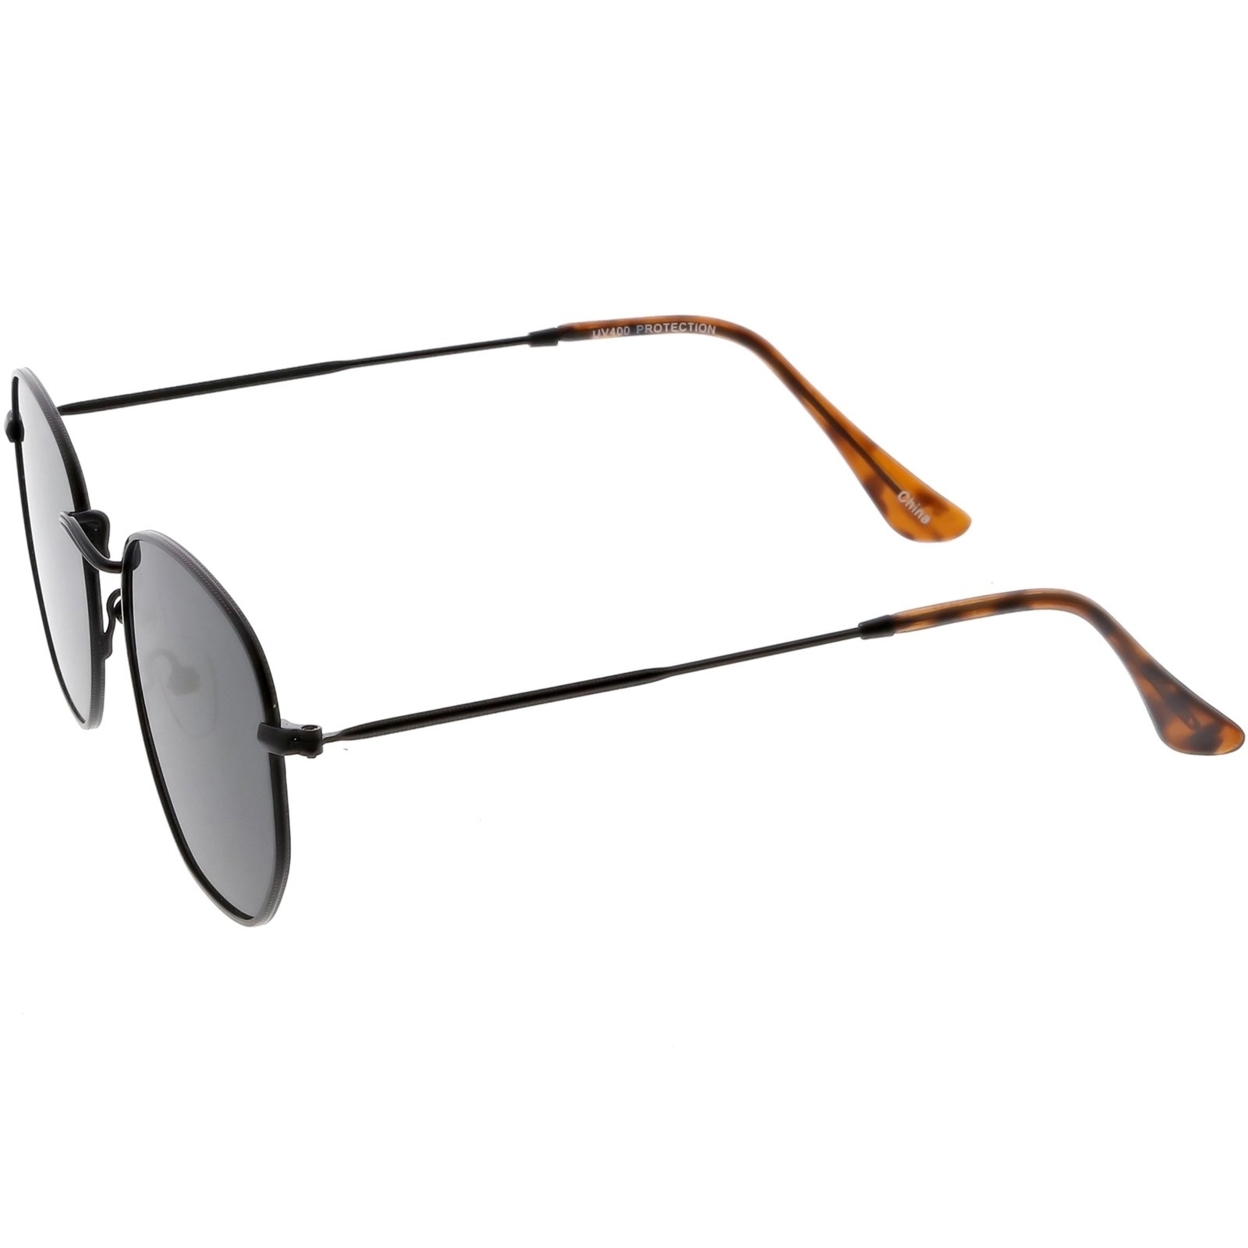 Modern Hexagonal Sunglasses Slim Metal Arms Neutral Colored Flat Lens 51mm - Silver / Smoke